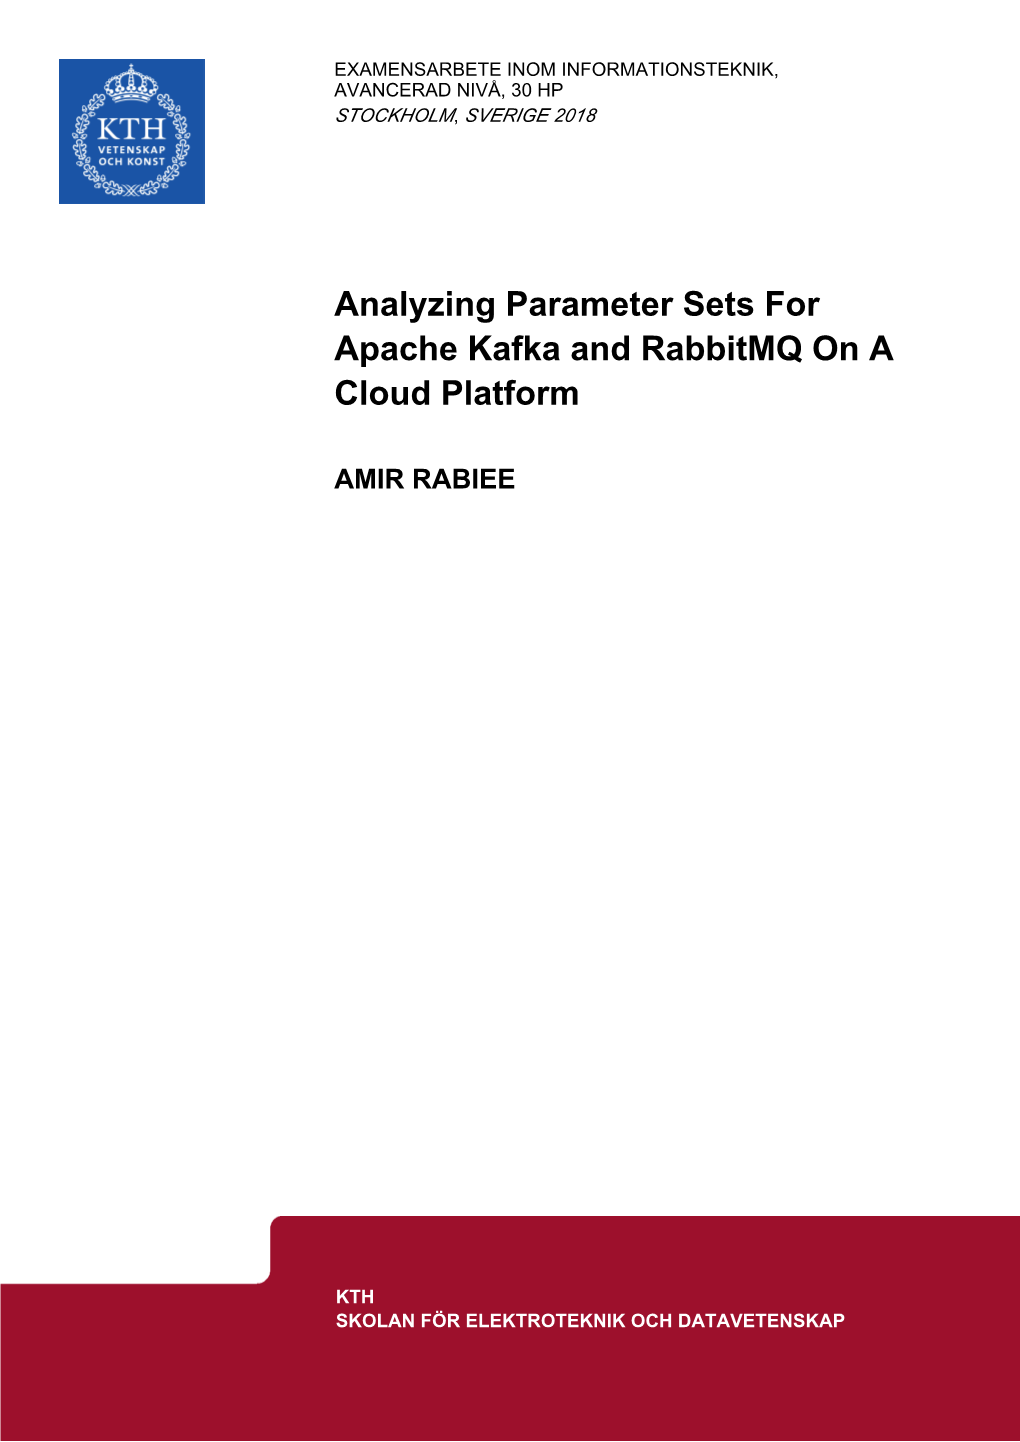 Analyzing Parameter Sets for Apache Kafka and Rabbitmq on a Cloud Platform